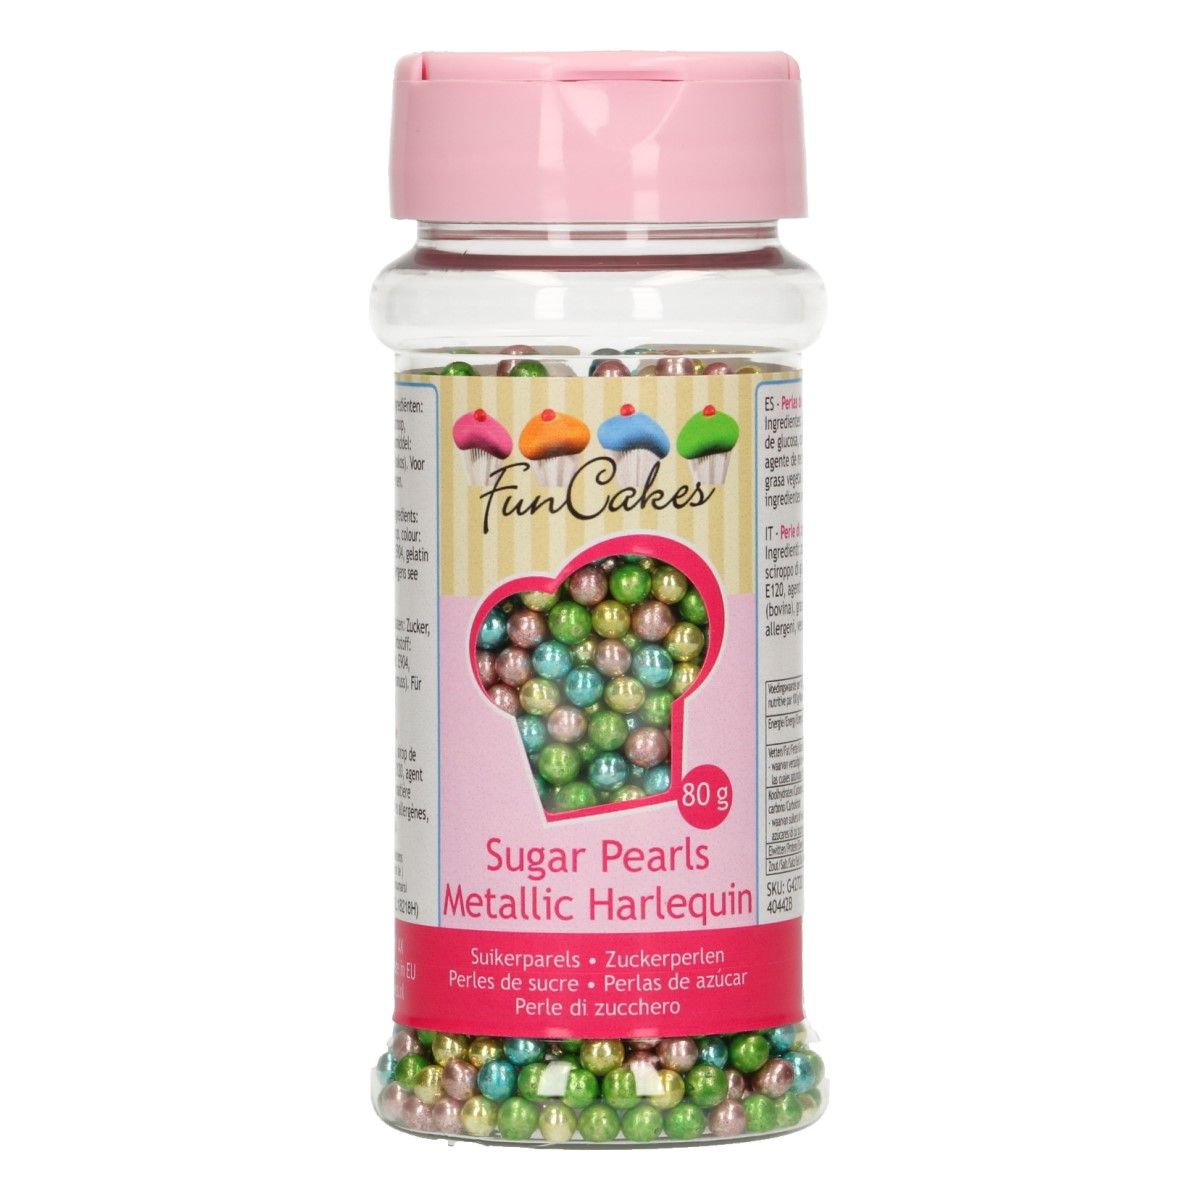 Perles en sucre 80 g – Harlequin métallique